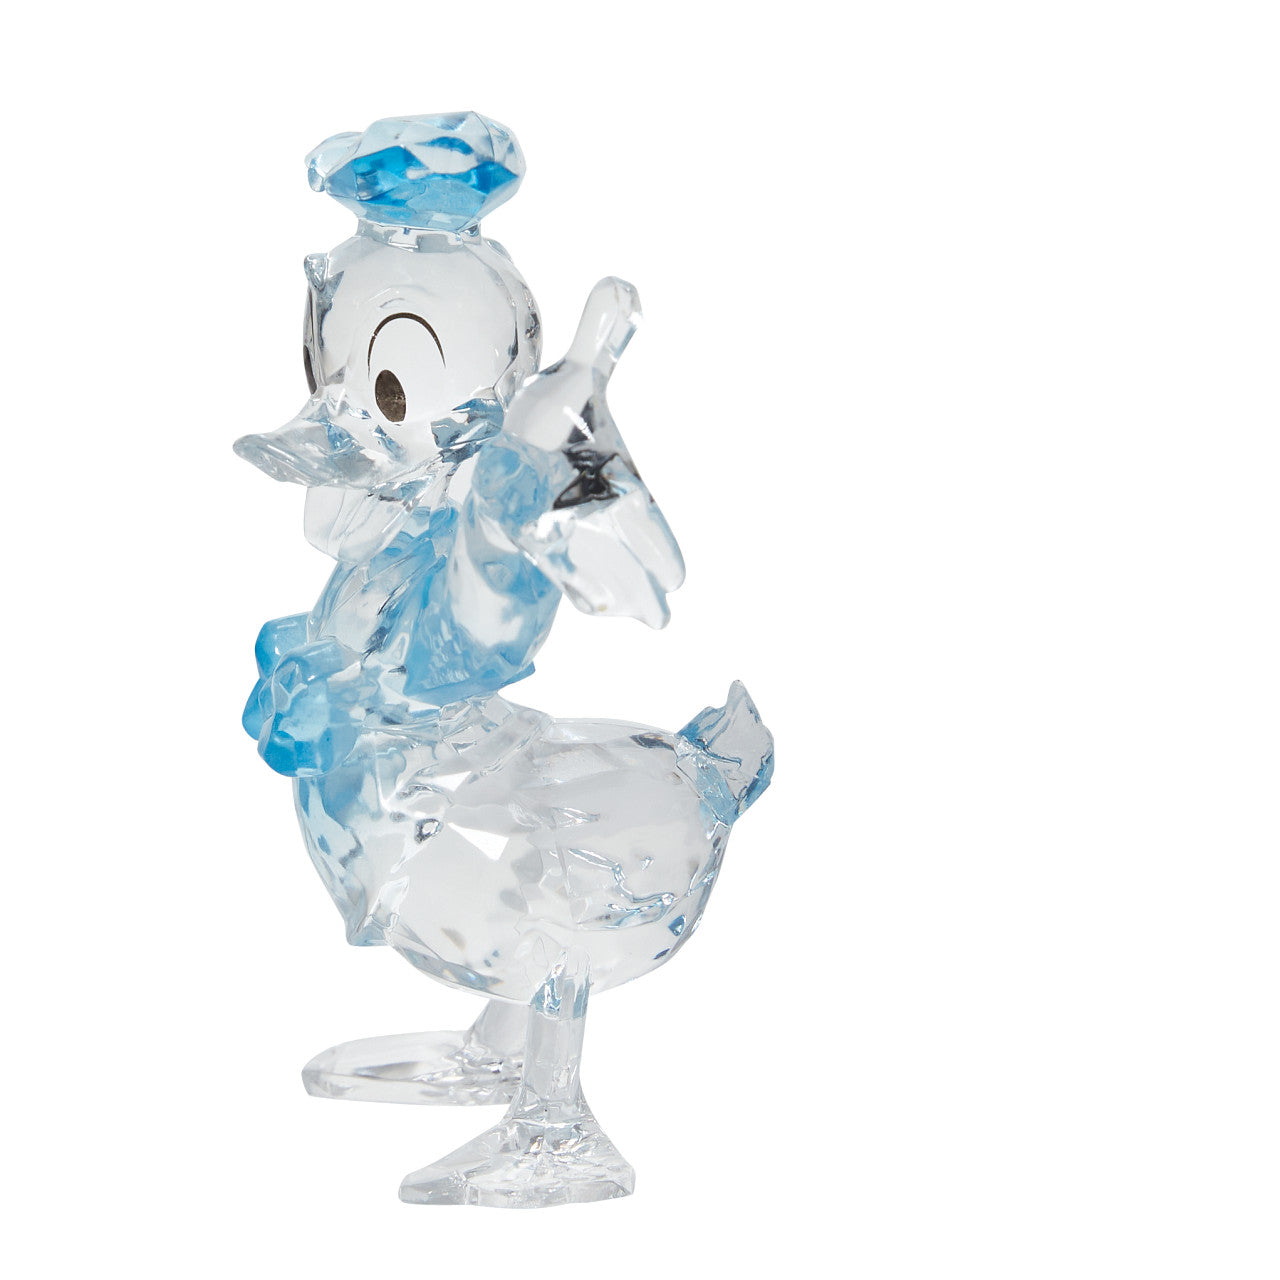 Donald Duck Facets Figurine